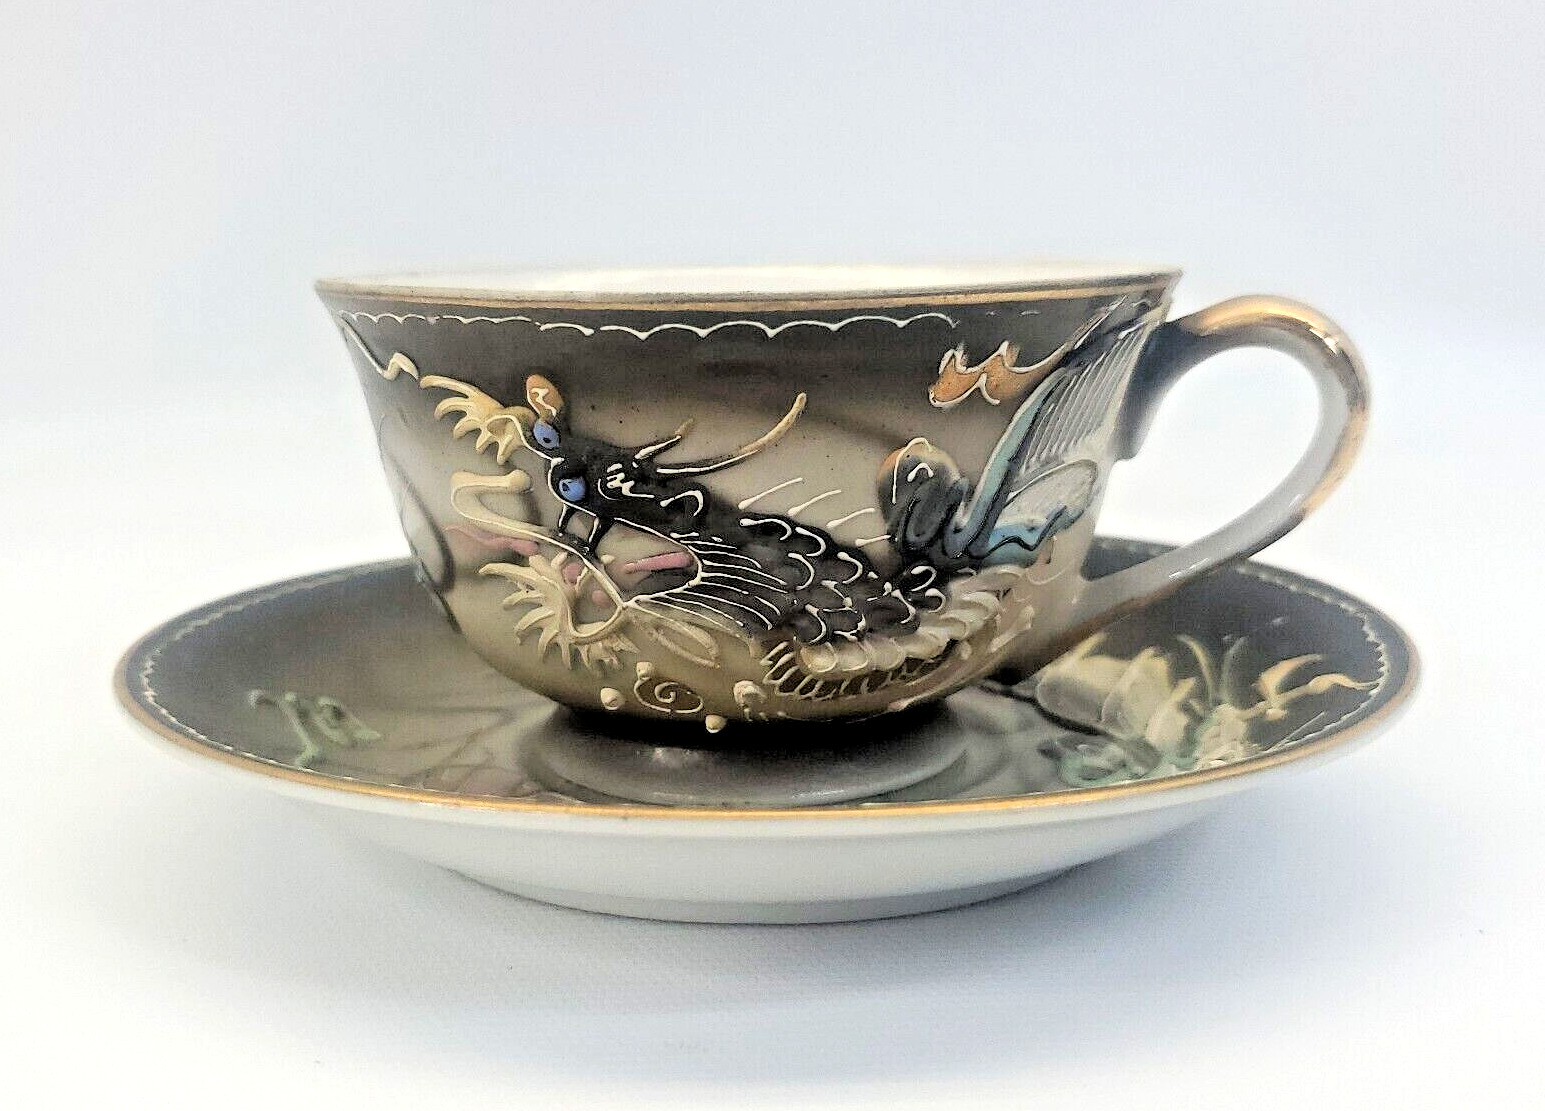 VTG Fleetwood Raised 3D Dragon Teacup & Saucer Japan Asian Small Tea Cup